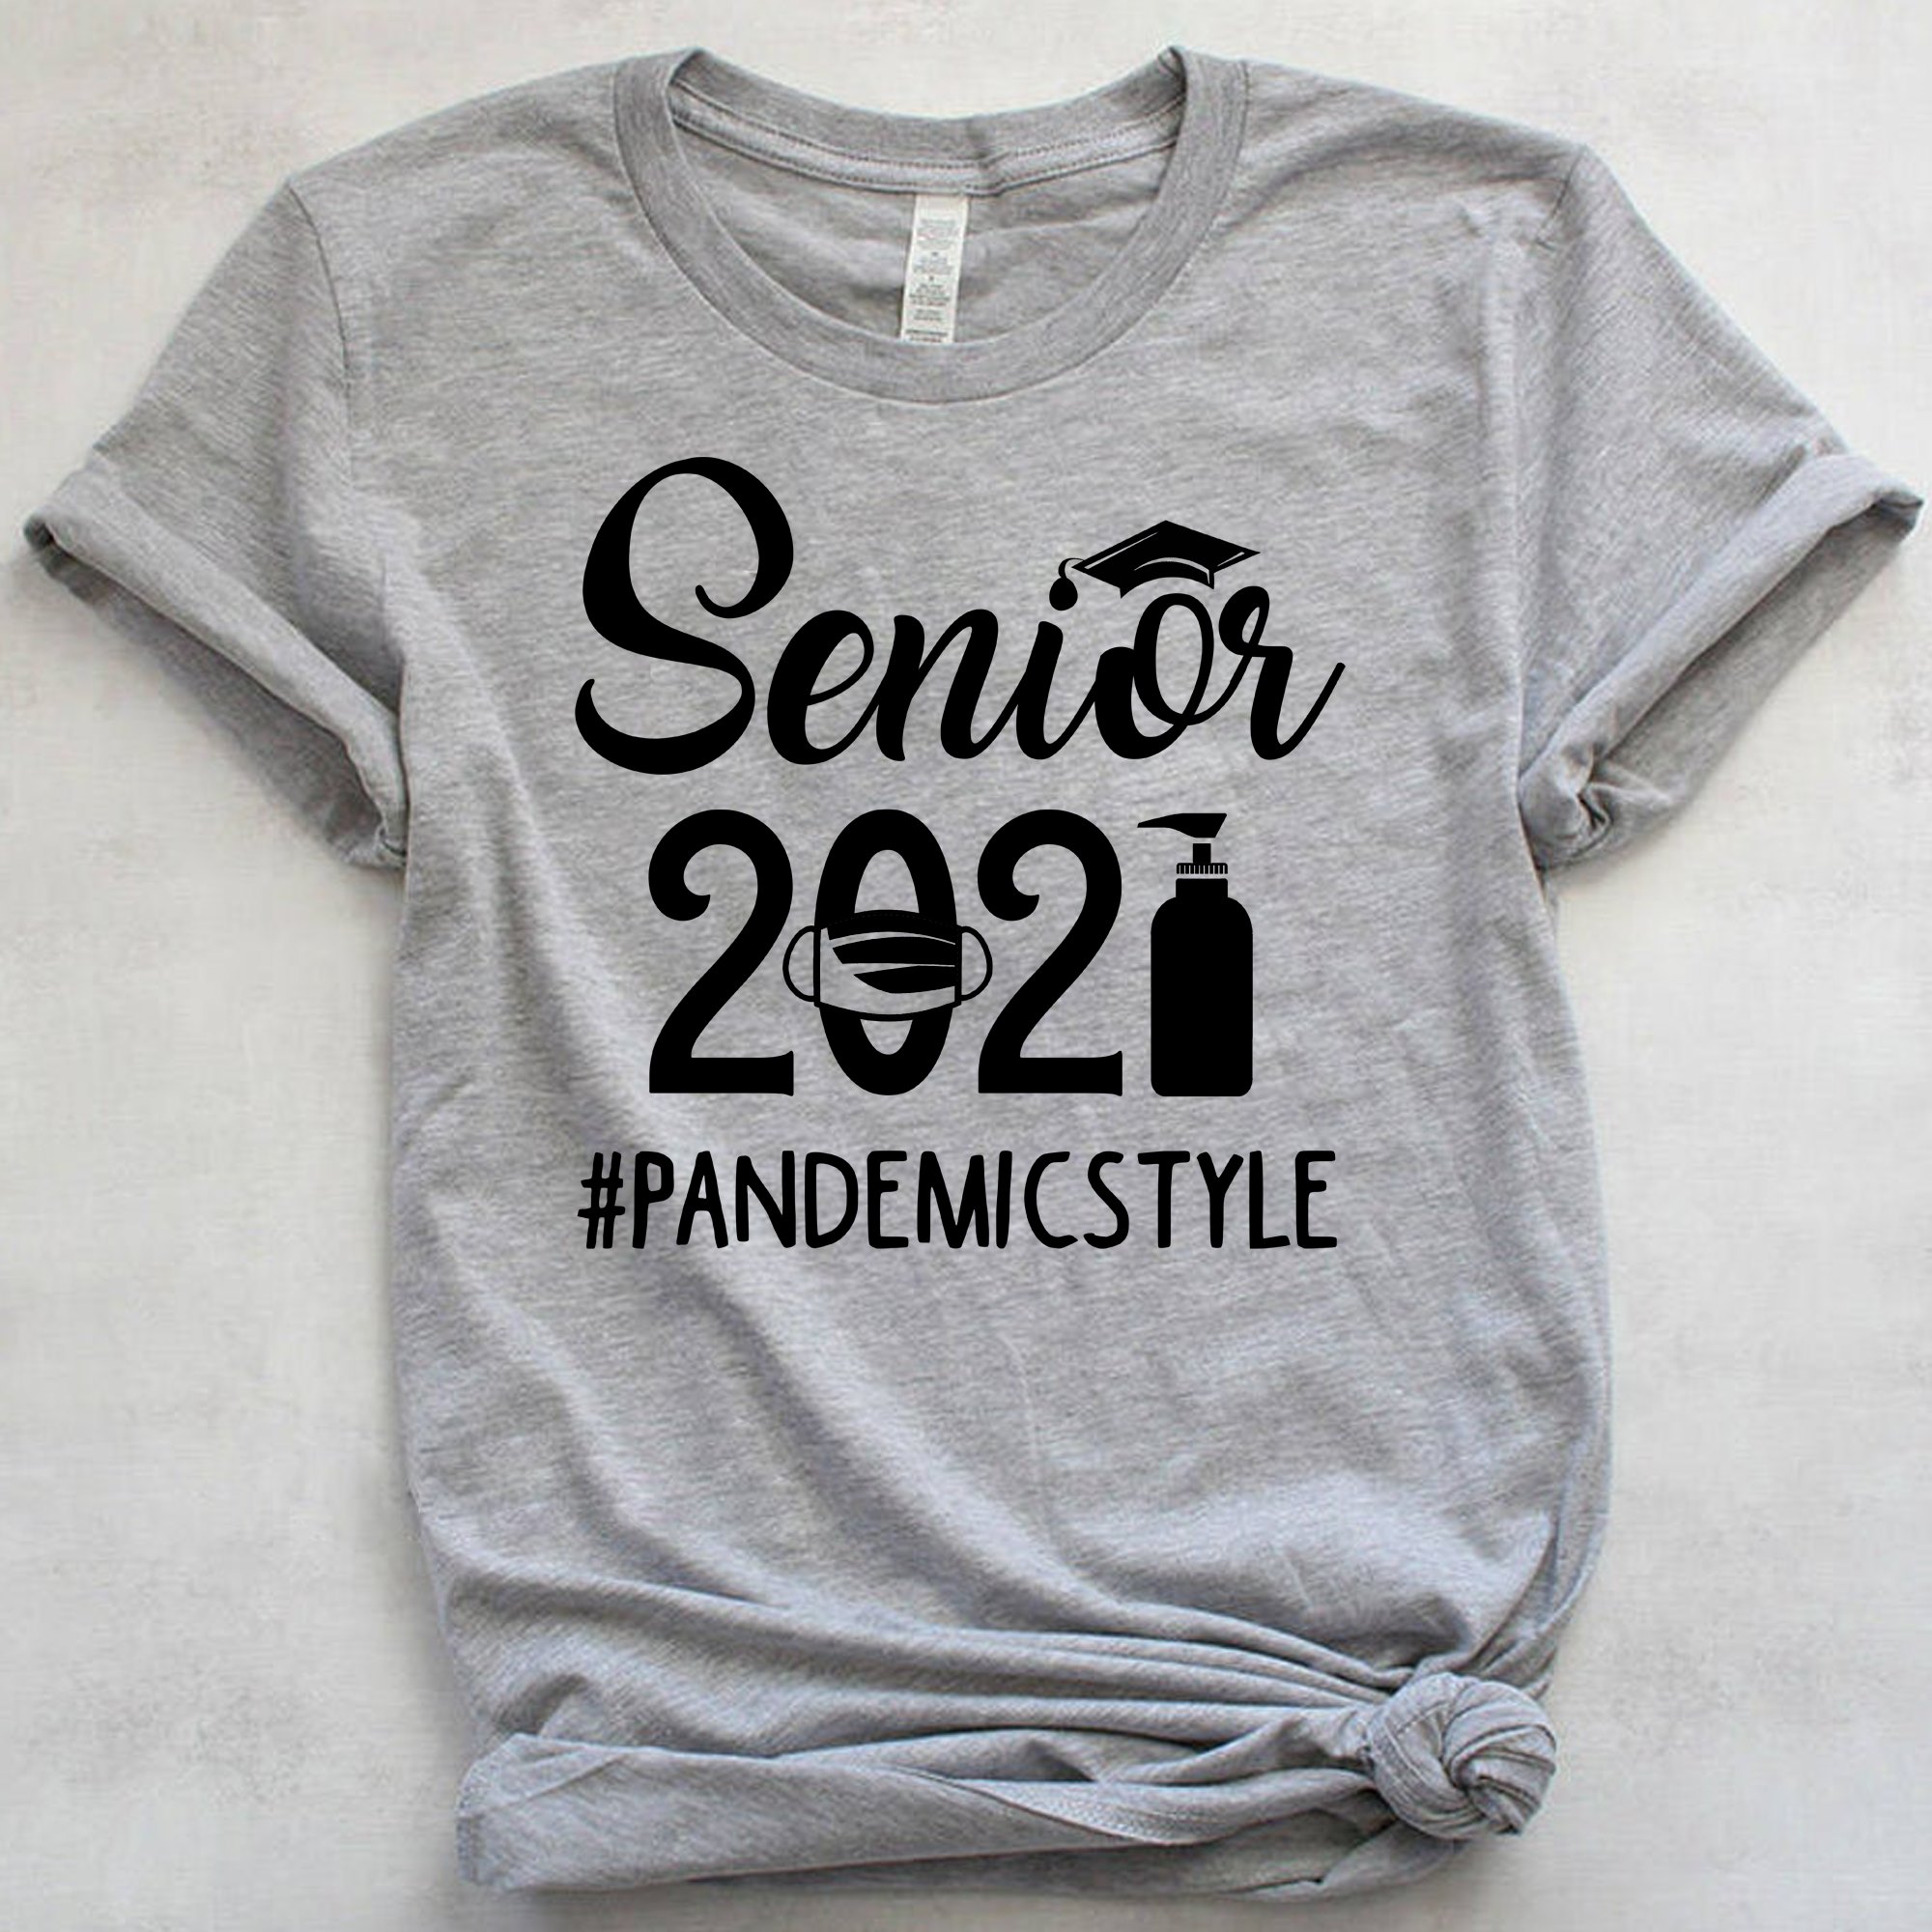 Senior 2021 - Pandemic style, quarantine time